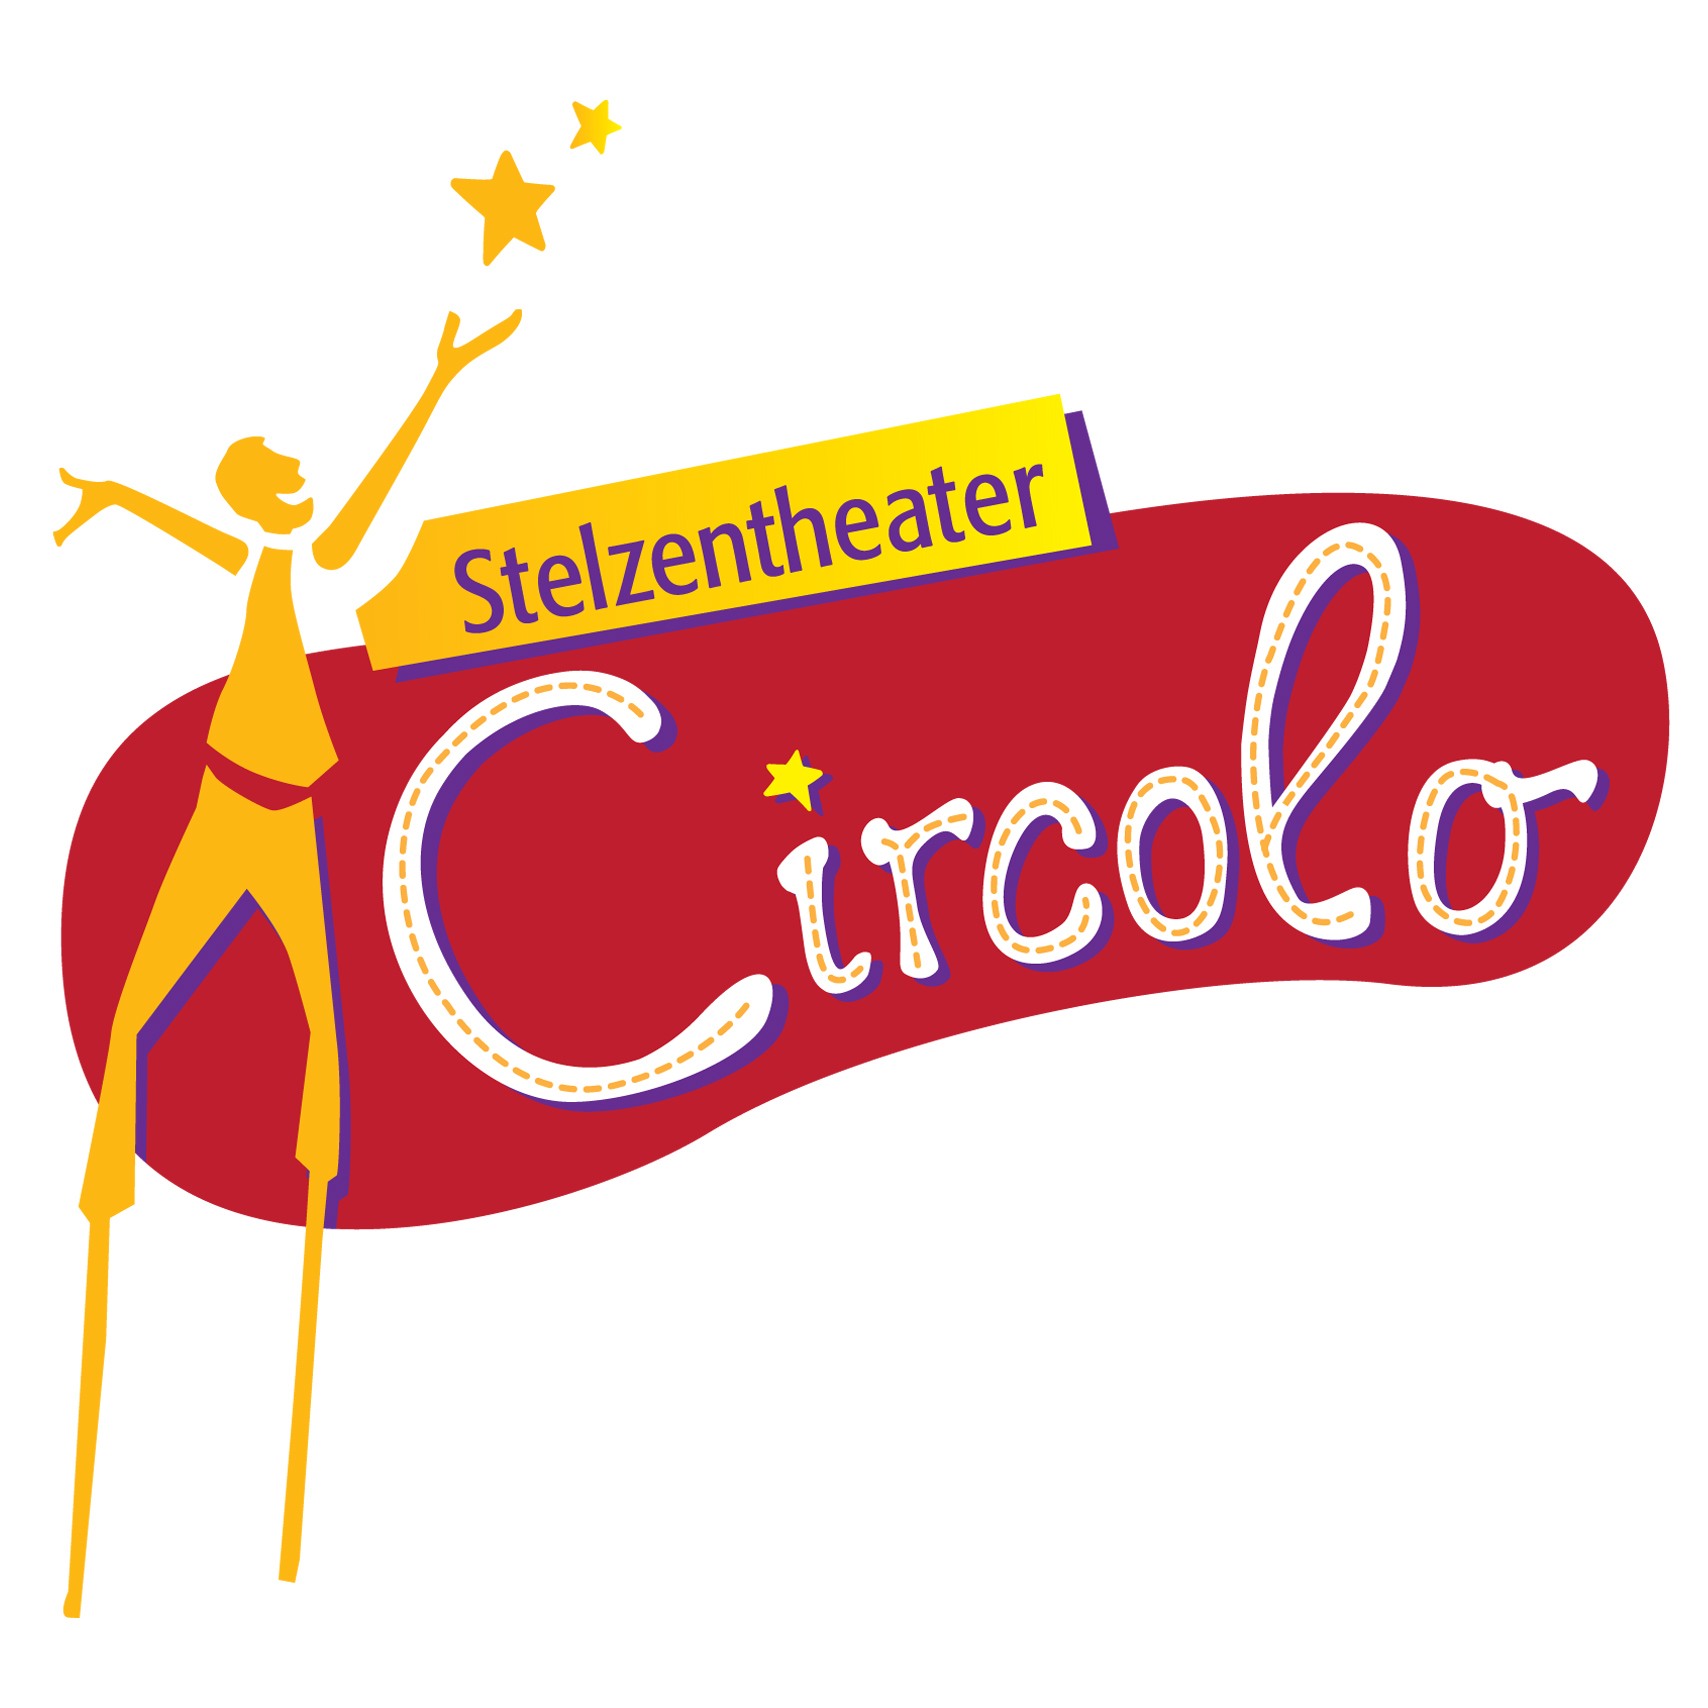 (c) Stelzentheater-circolo.de